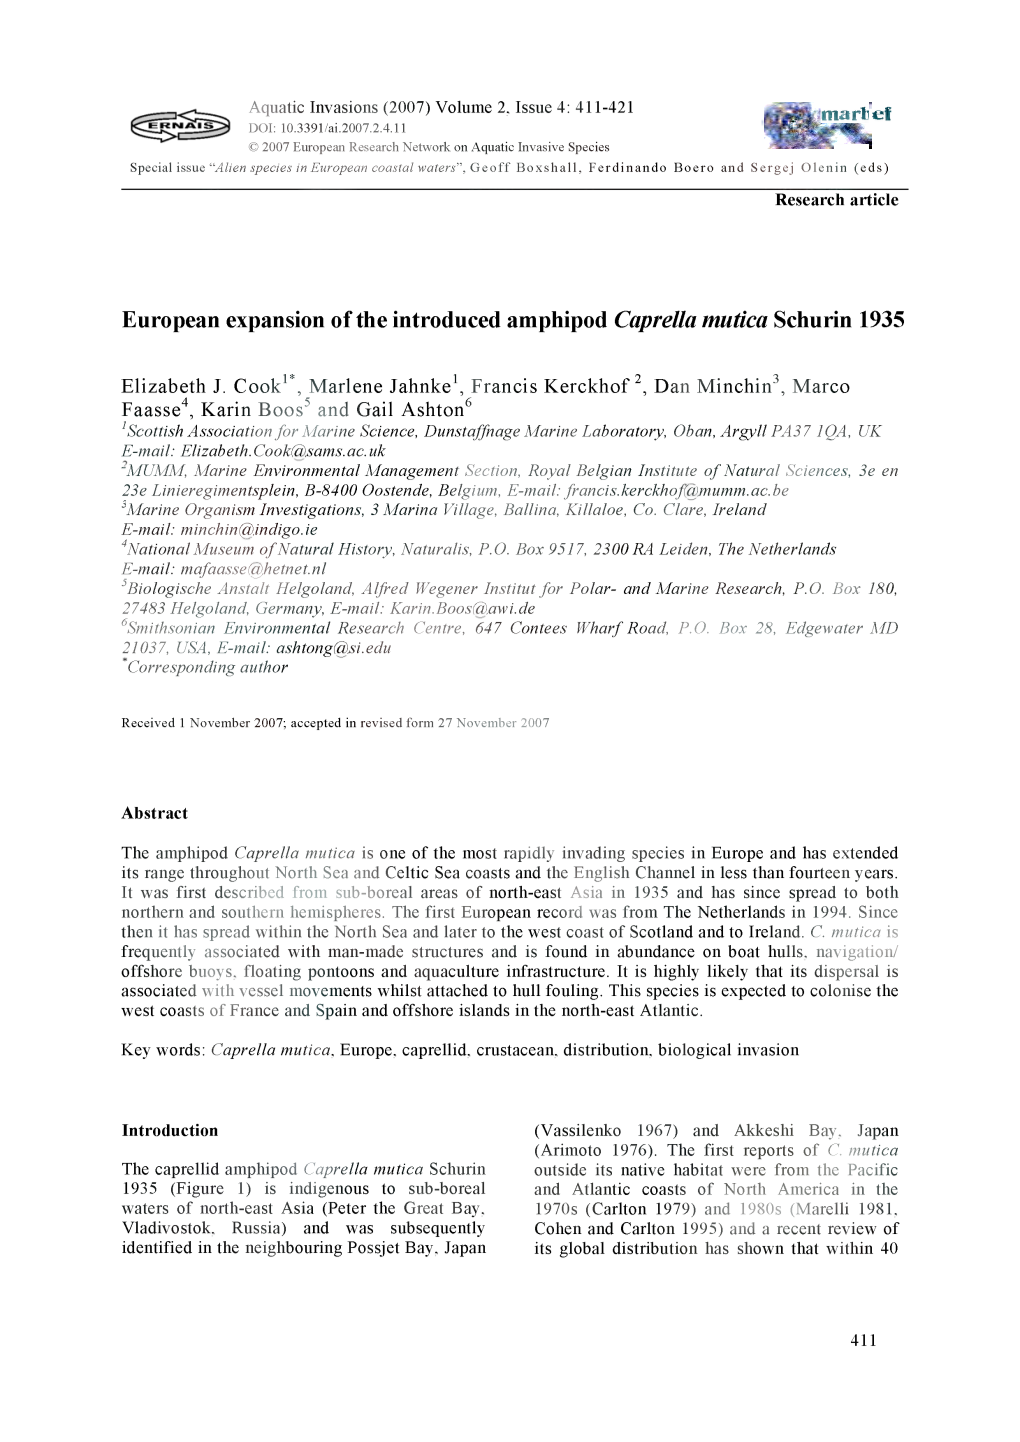 European Expansion of the Introduced Amphipodcaprella Mutica Schurin 1935